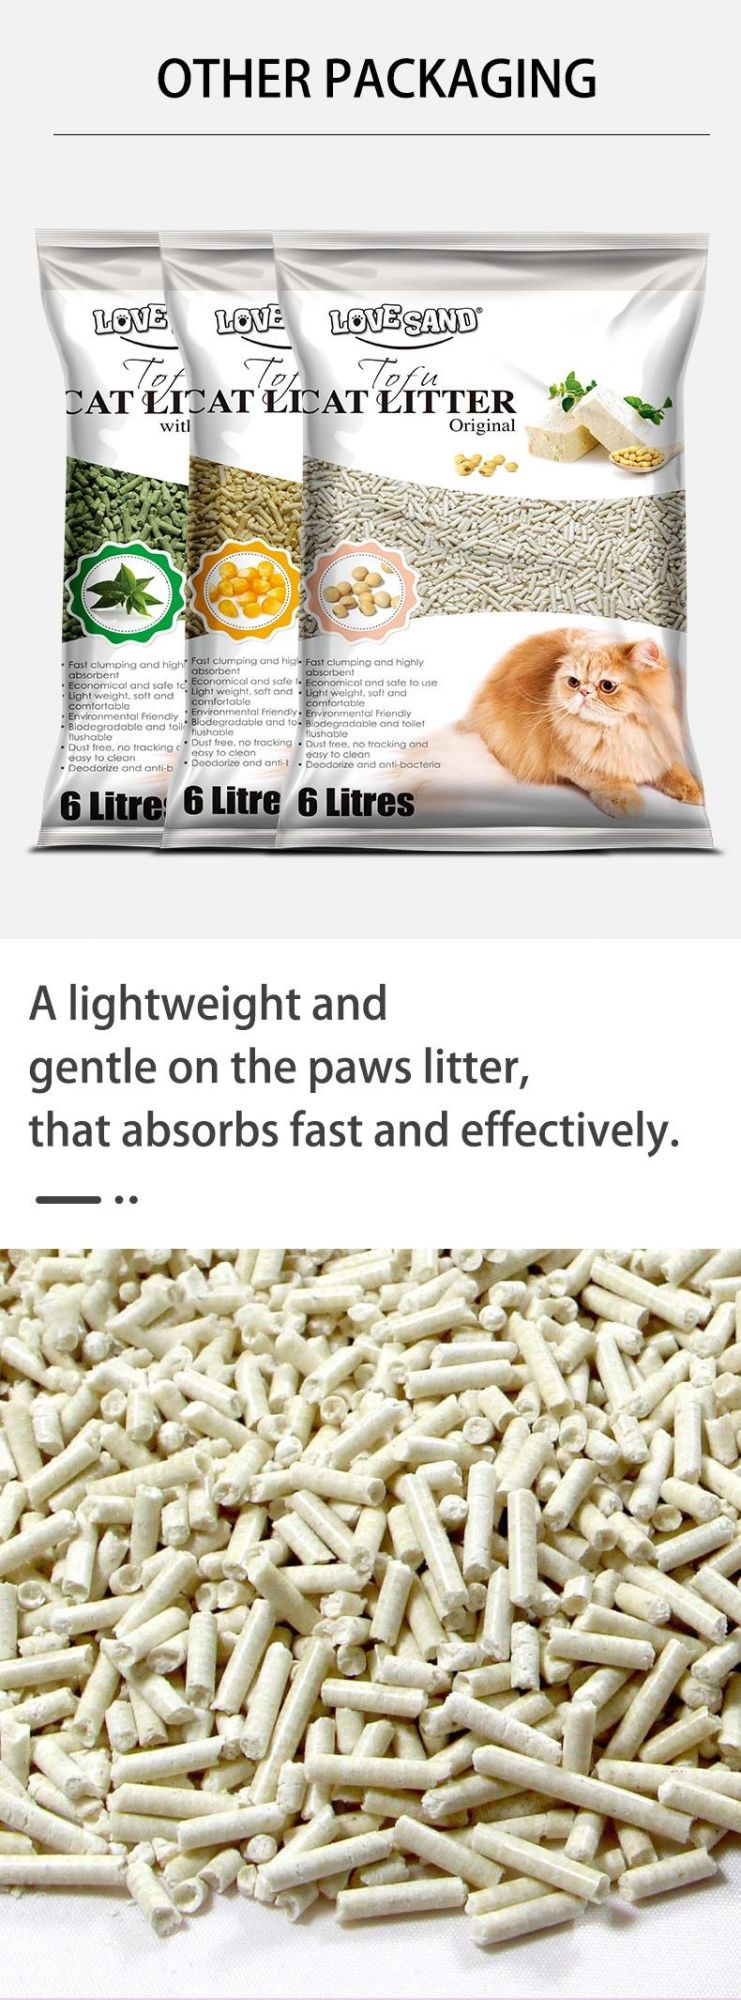 Emily Supply Eco-Friendly Flushable Plant Tofu Cat Litter Pet Products